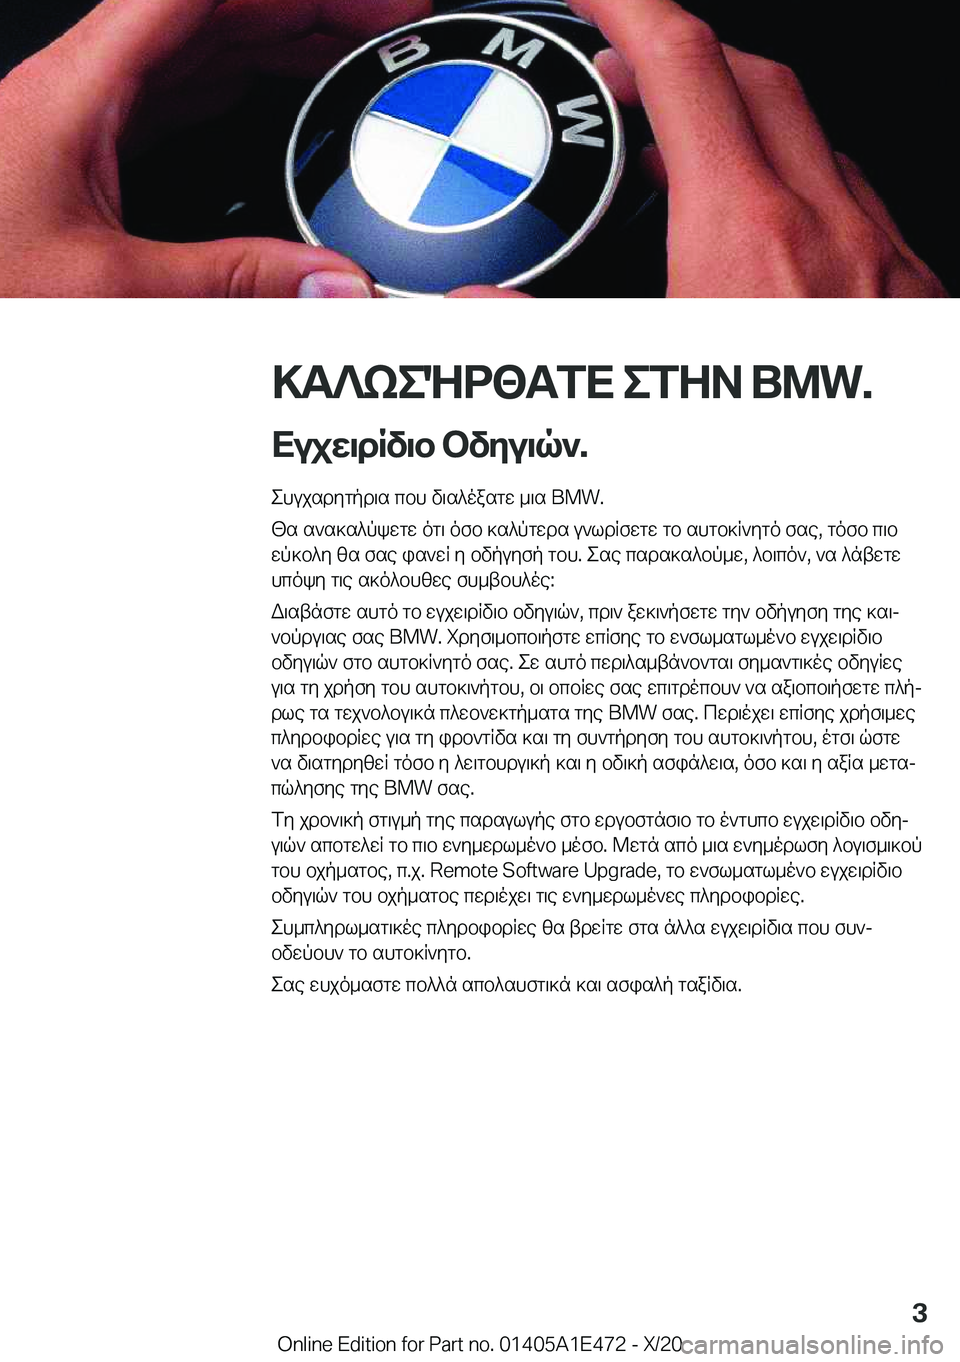 BMW M3 2021  ΟΔΗΓΌΣ ΧΡΉΣΗΣ (in Greek) >T?keNd<TfX�efZA��B�M�W�.
Xujw\dRv\b�bvyu\q`�. ehujsdygpd\s�cbh�v\s^oasgw�_\s��B�M�W�.
[s�s`s]s^pkwgw�og\�ofb�